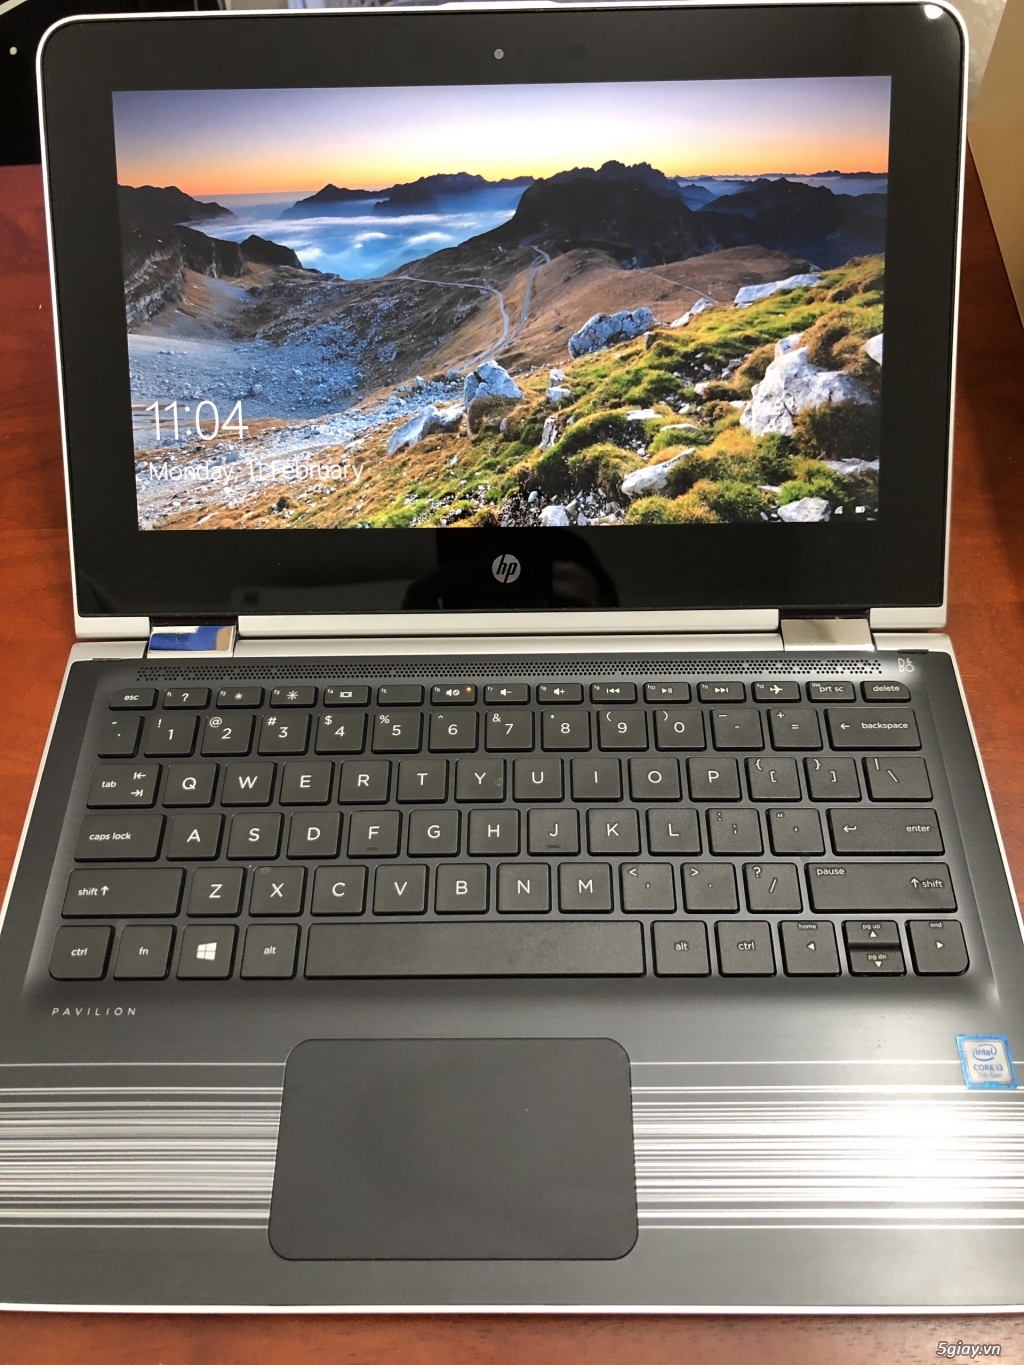 Bán laptop HP Pavilion x360 core i3-7100U cản ứng xoay 360, giá rẻ - 6